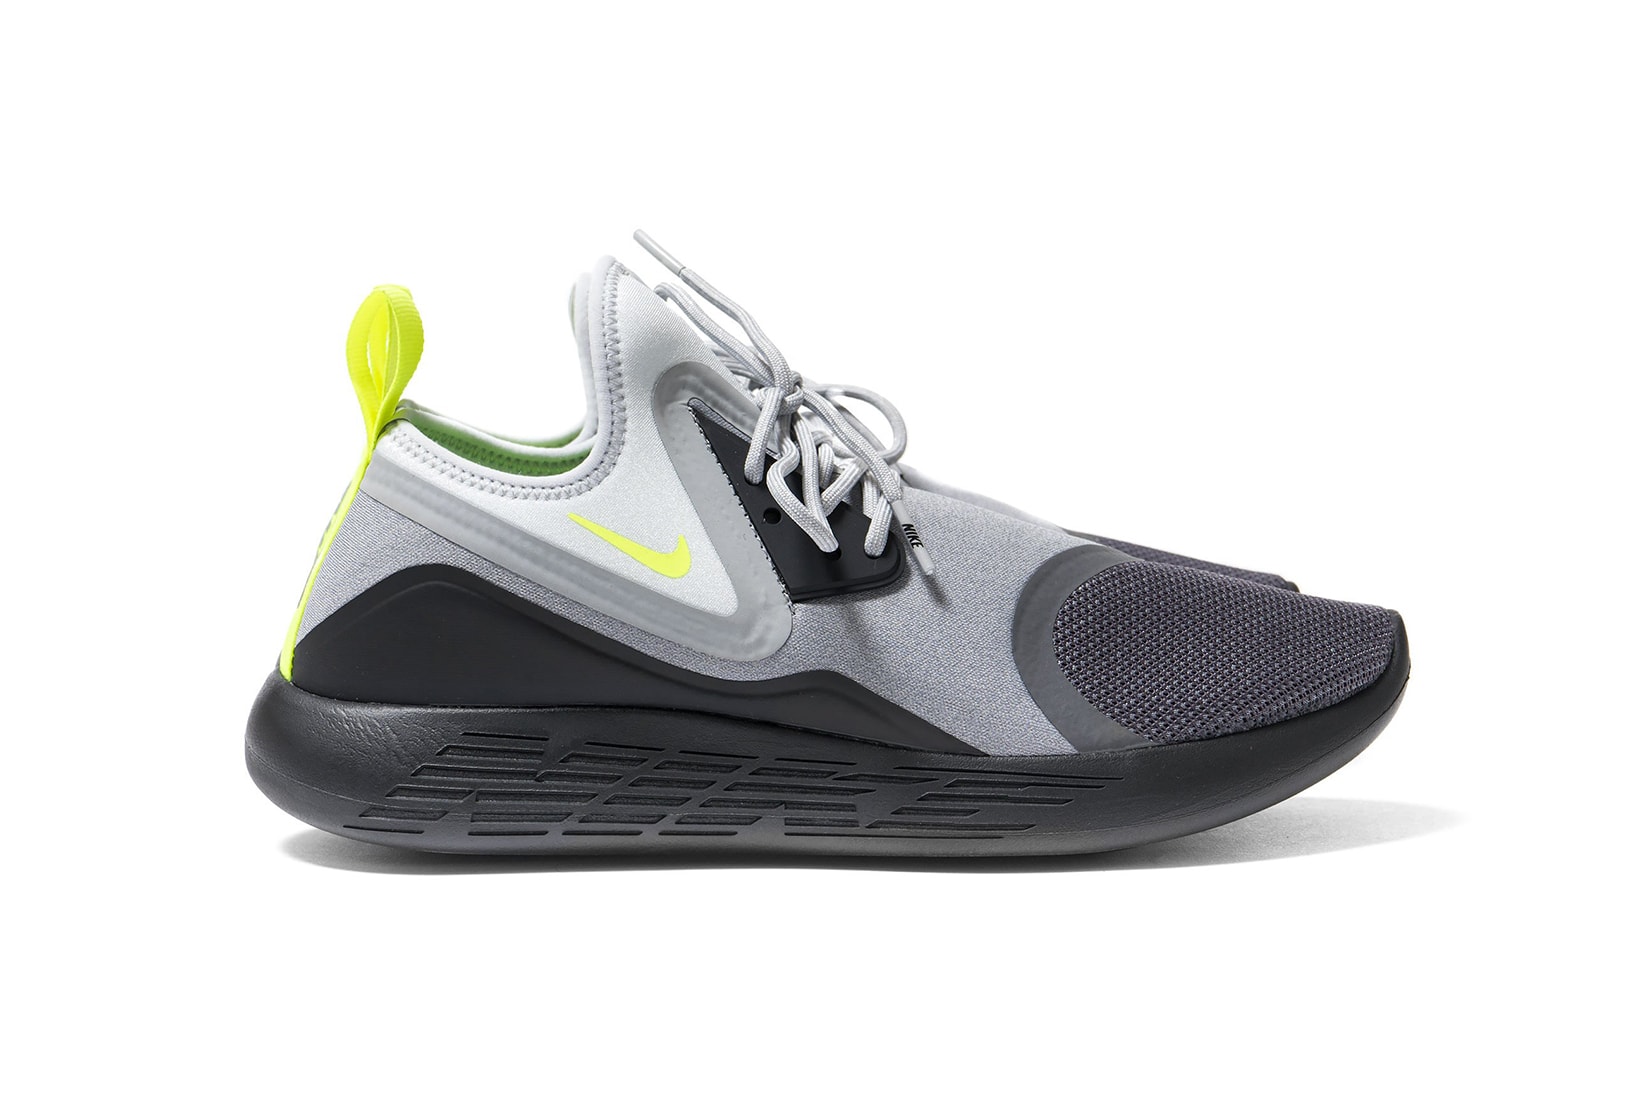 Nike LunarCharge Neon